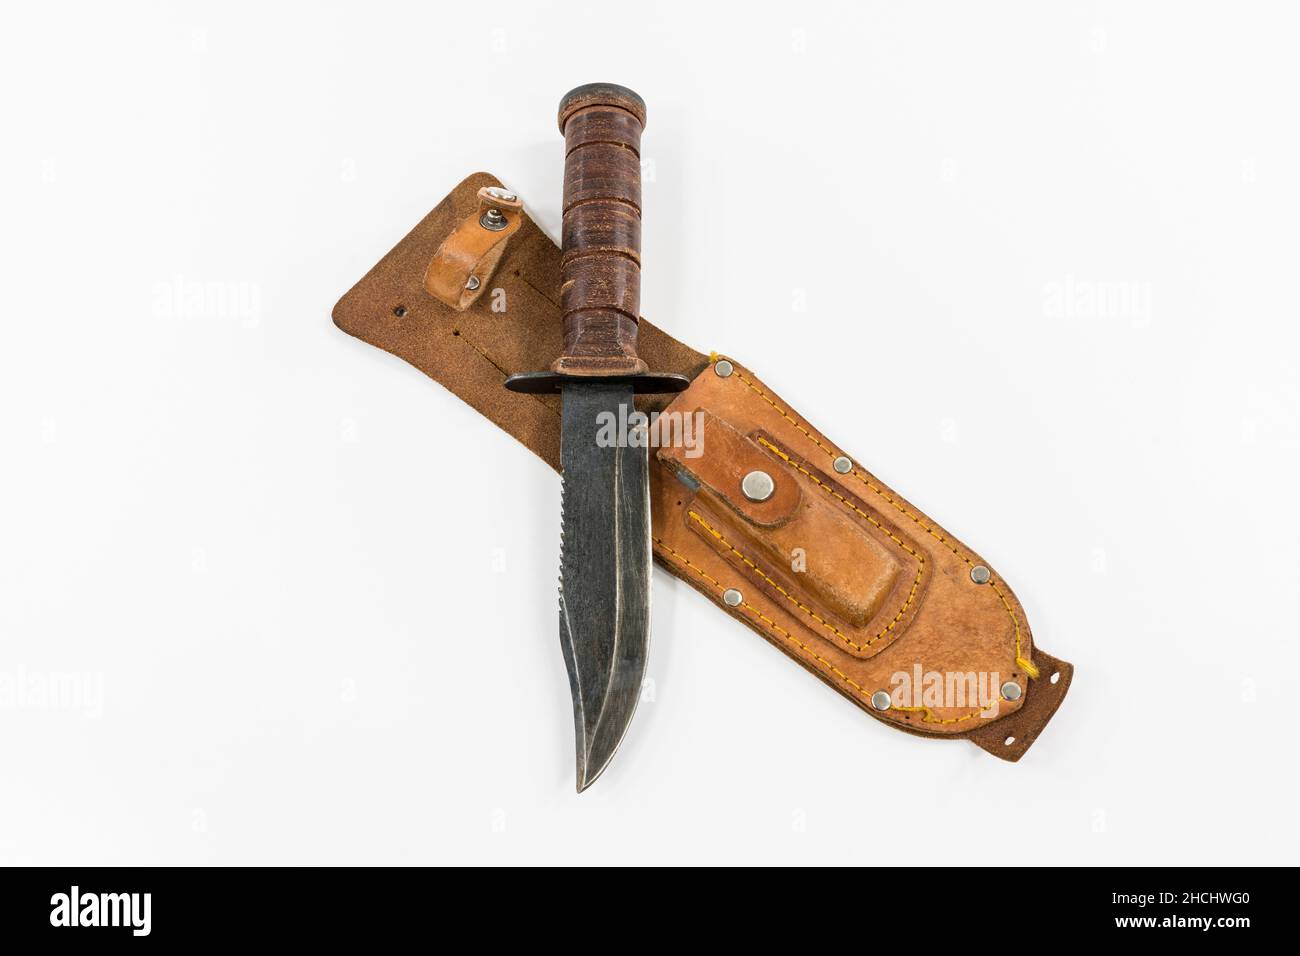 https://c8.alamy.com/comp/2HCHWG0/antique-hunting-knife-with-leather-sheath-and-sharpening-stone-2HCHWG0.jpg